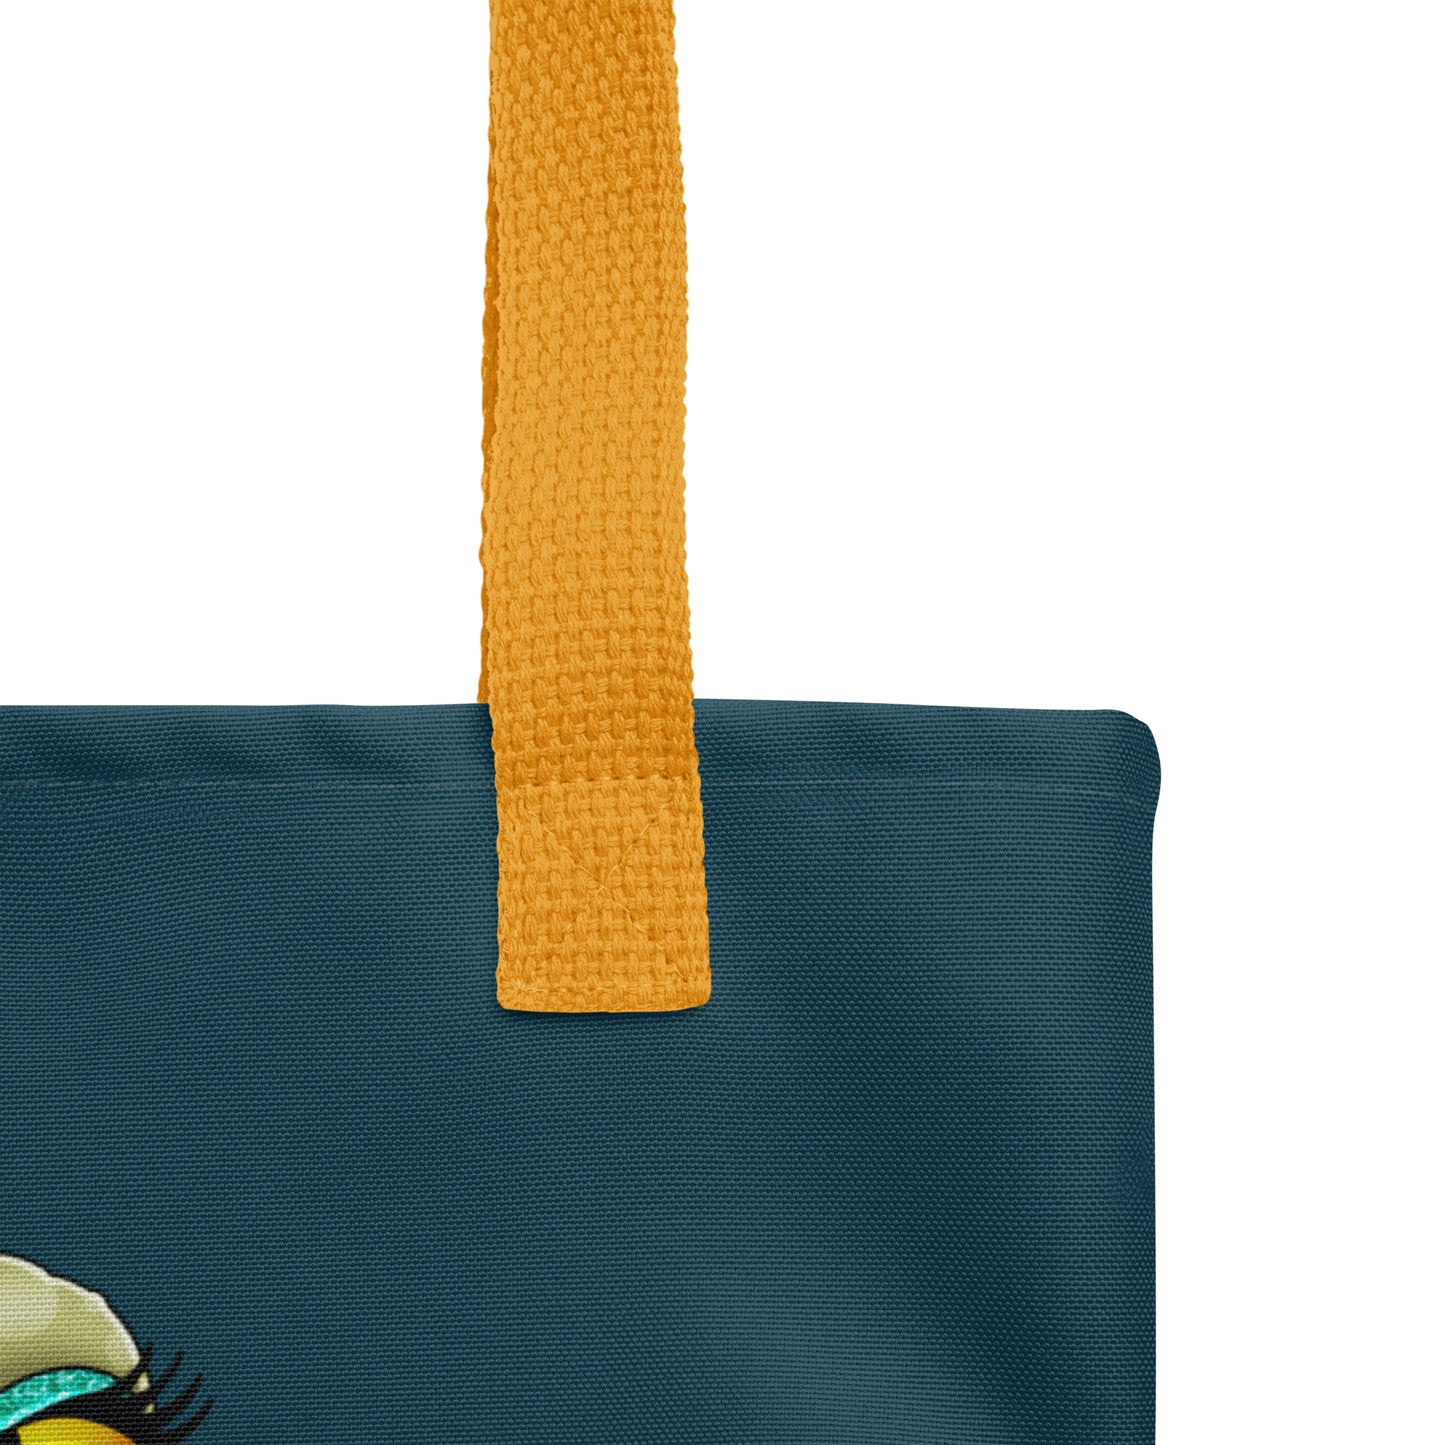 Stormseye design crafting frog large tote bag details view